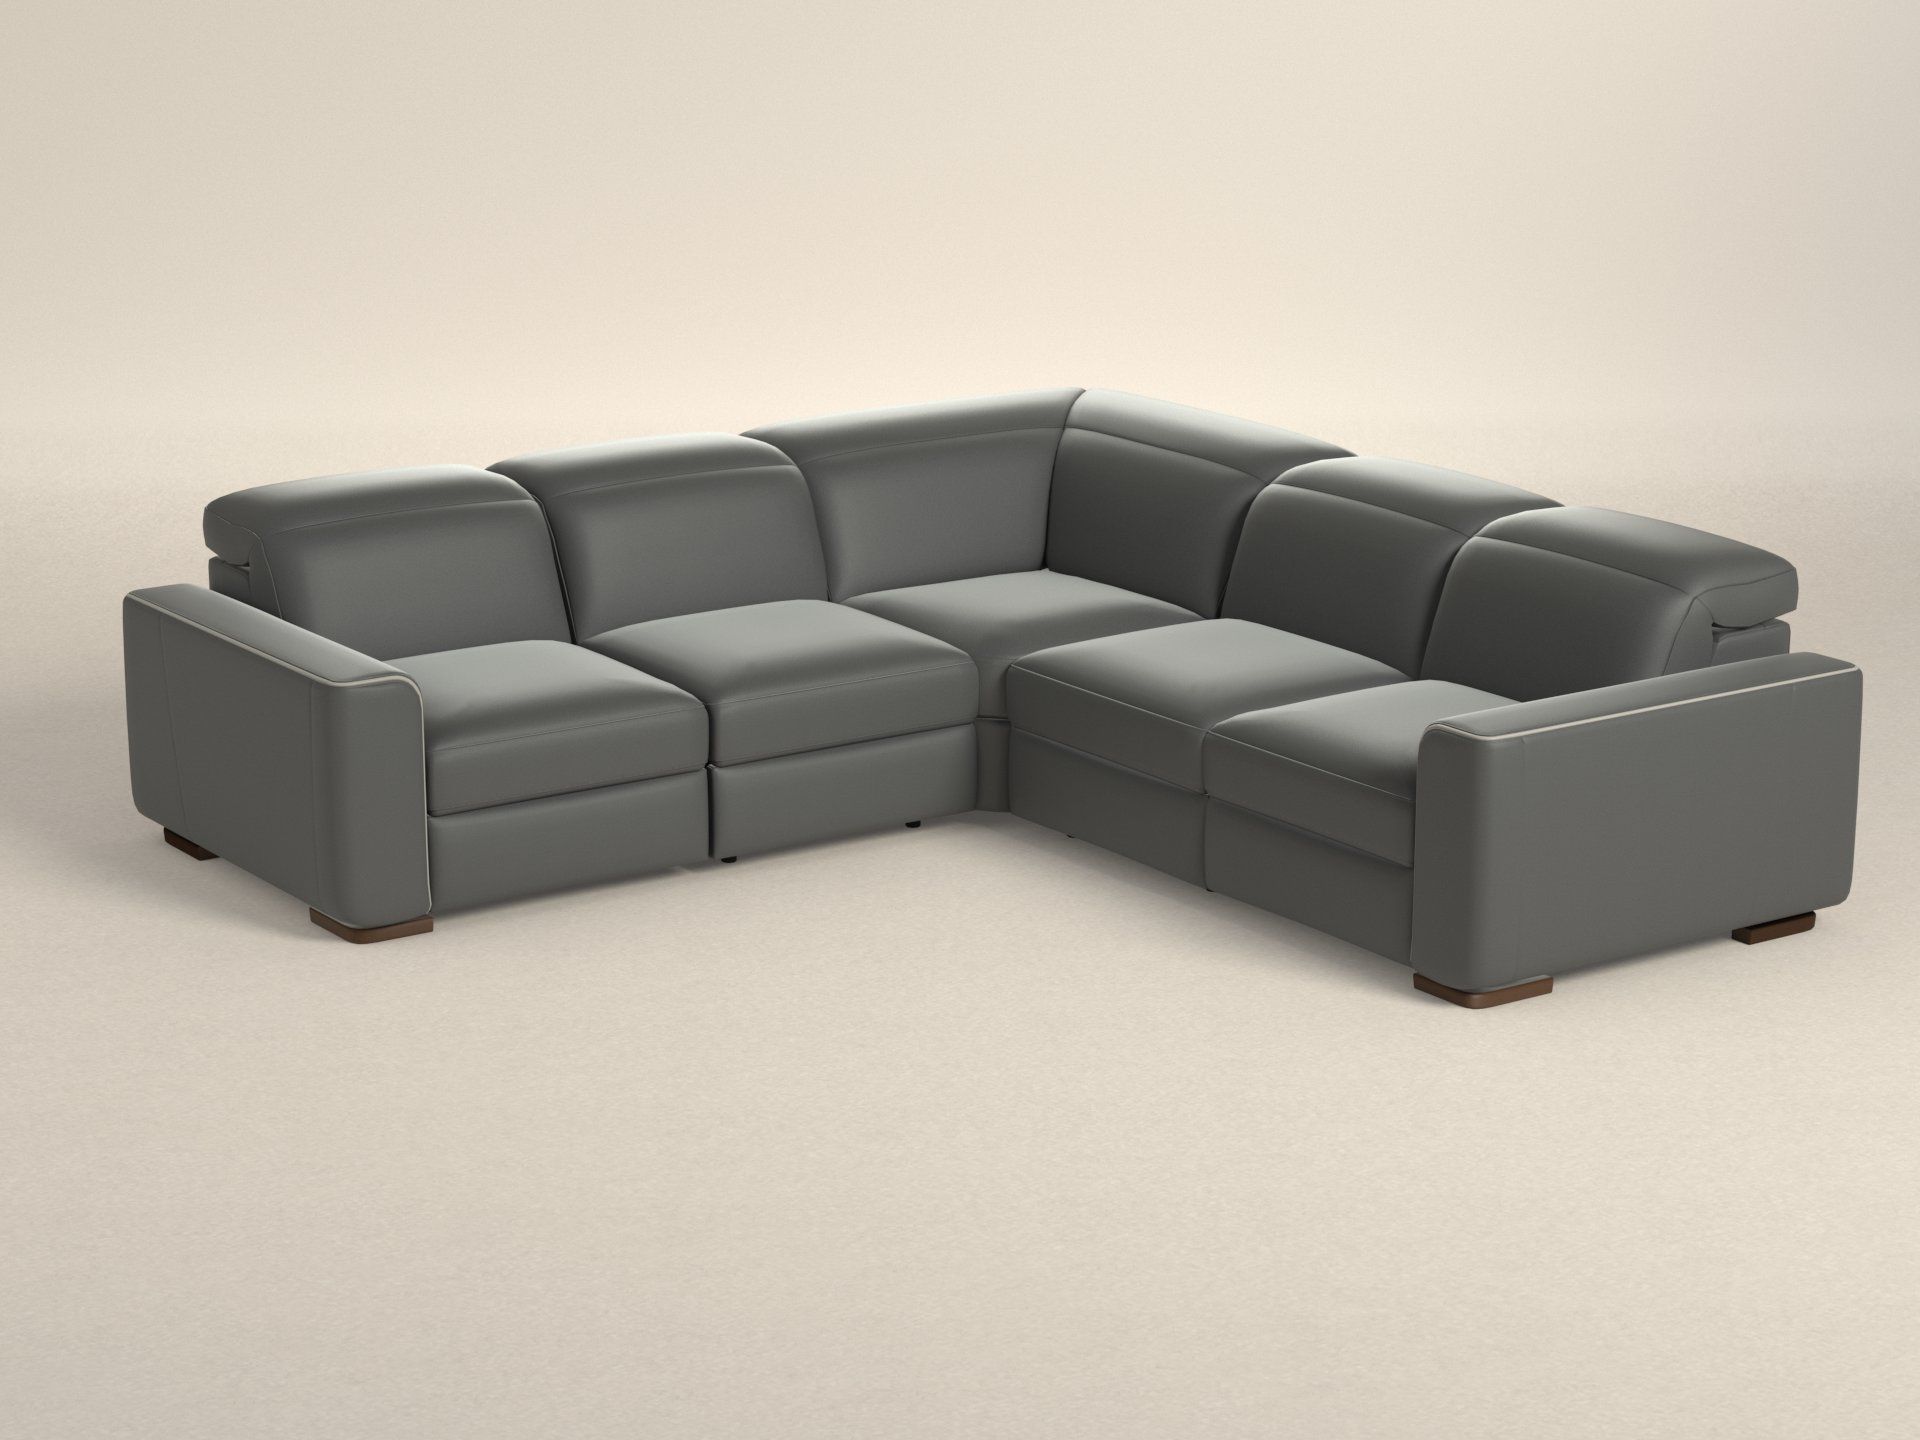 Preset default image - Diesis Sectional Corner Recliner Sofa - Leather